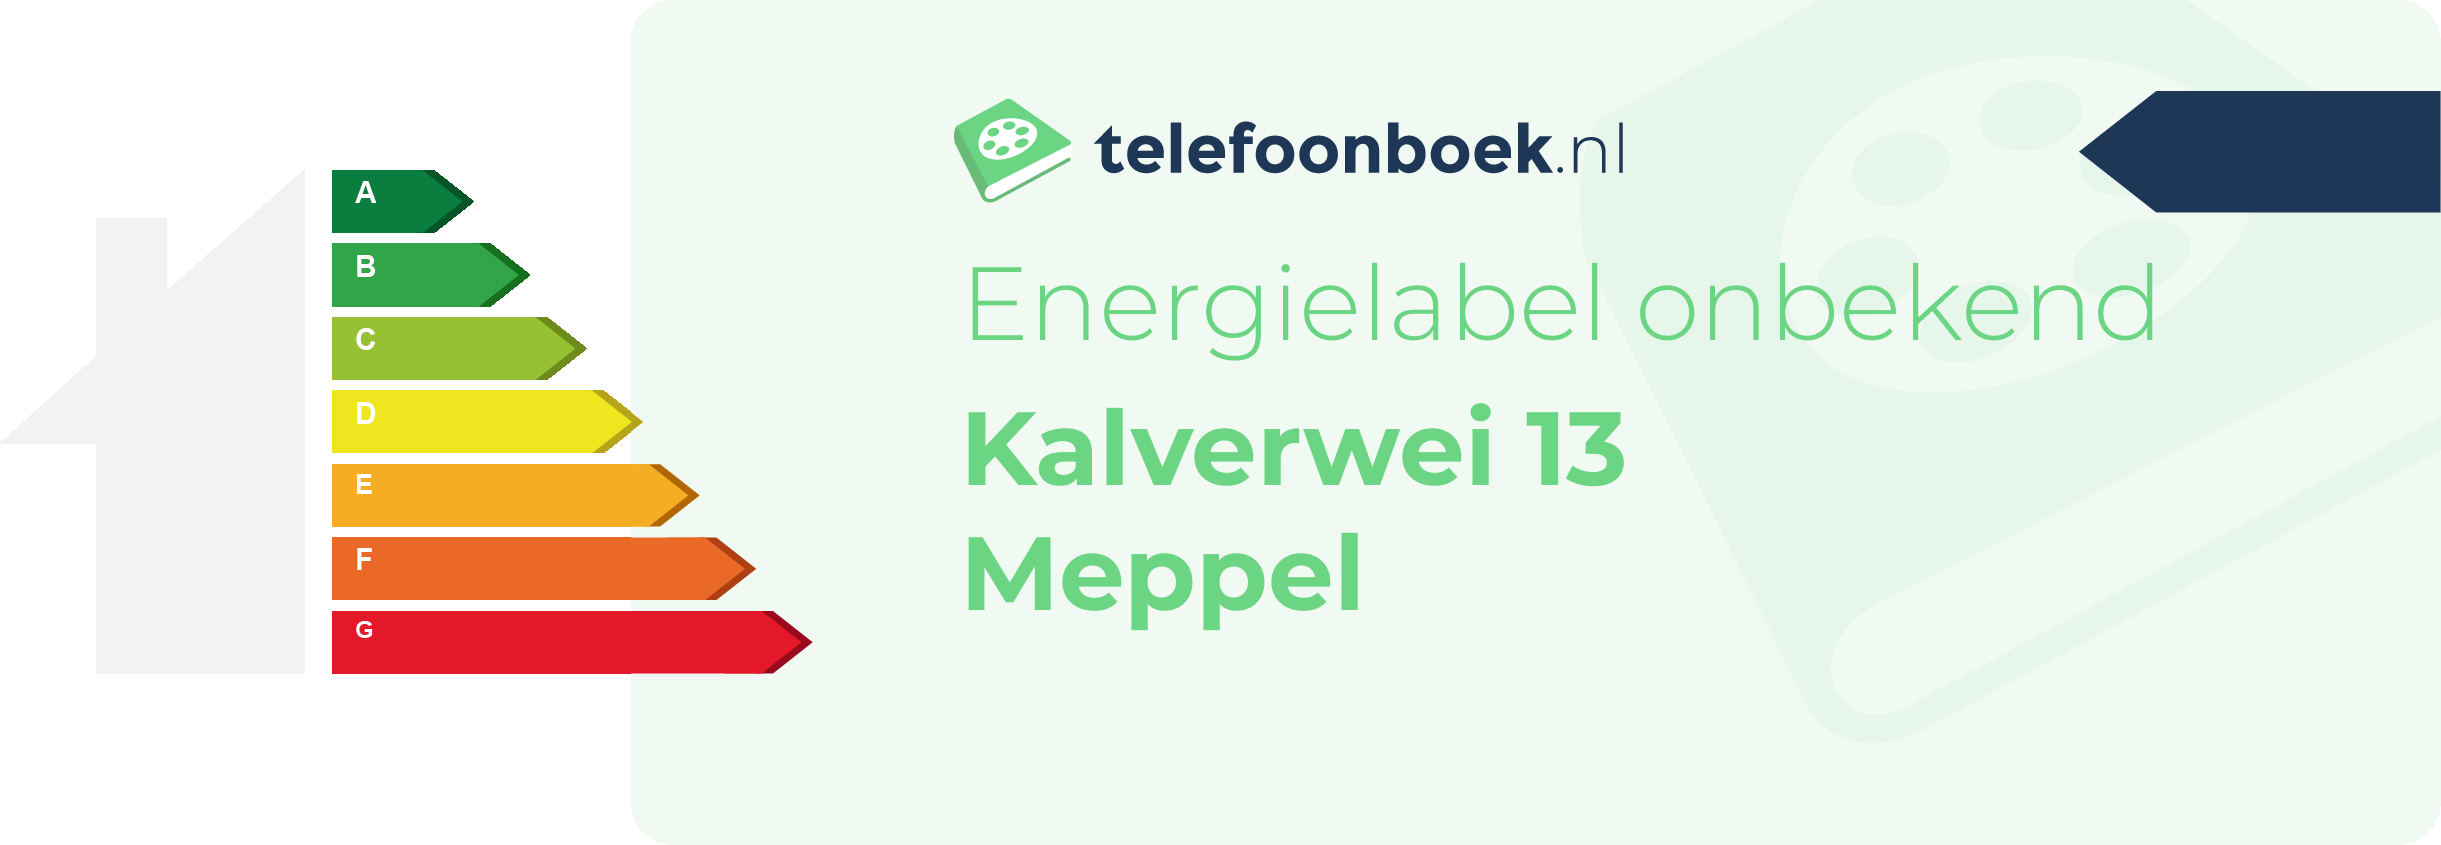 Energielabel Kalverwei 13 Meppel